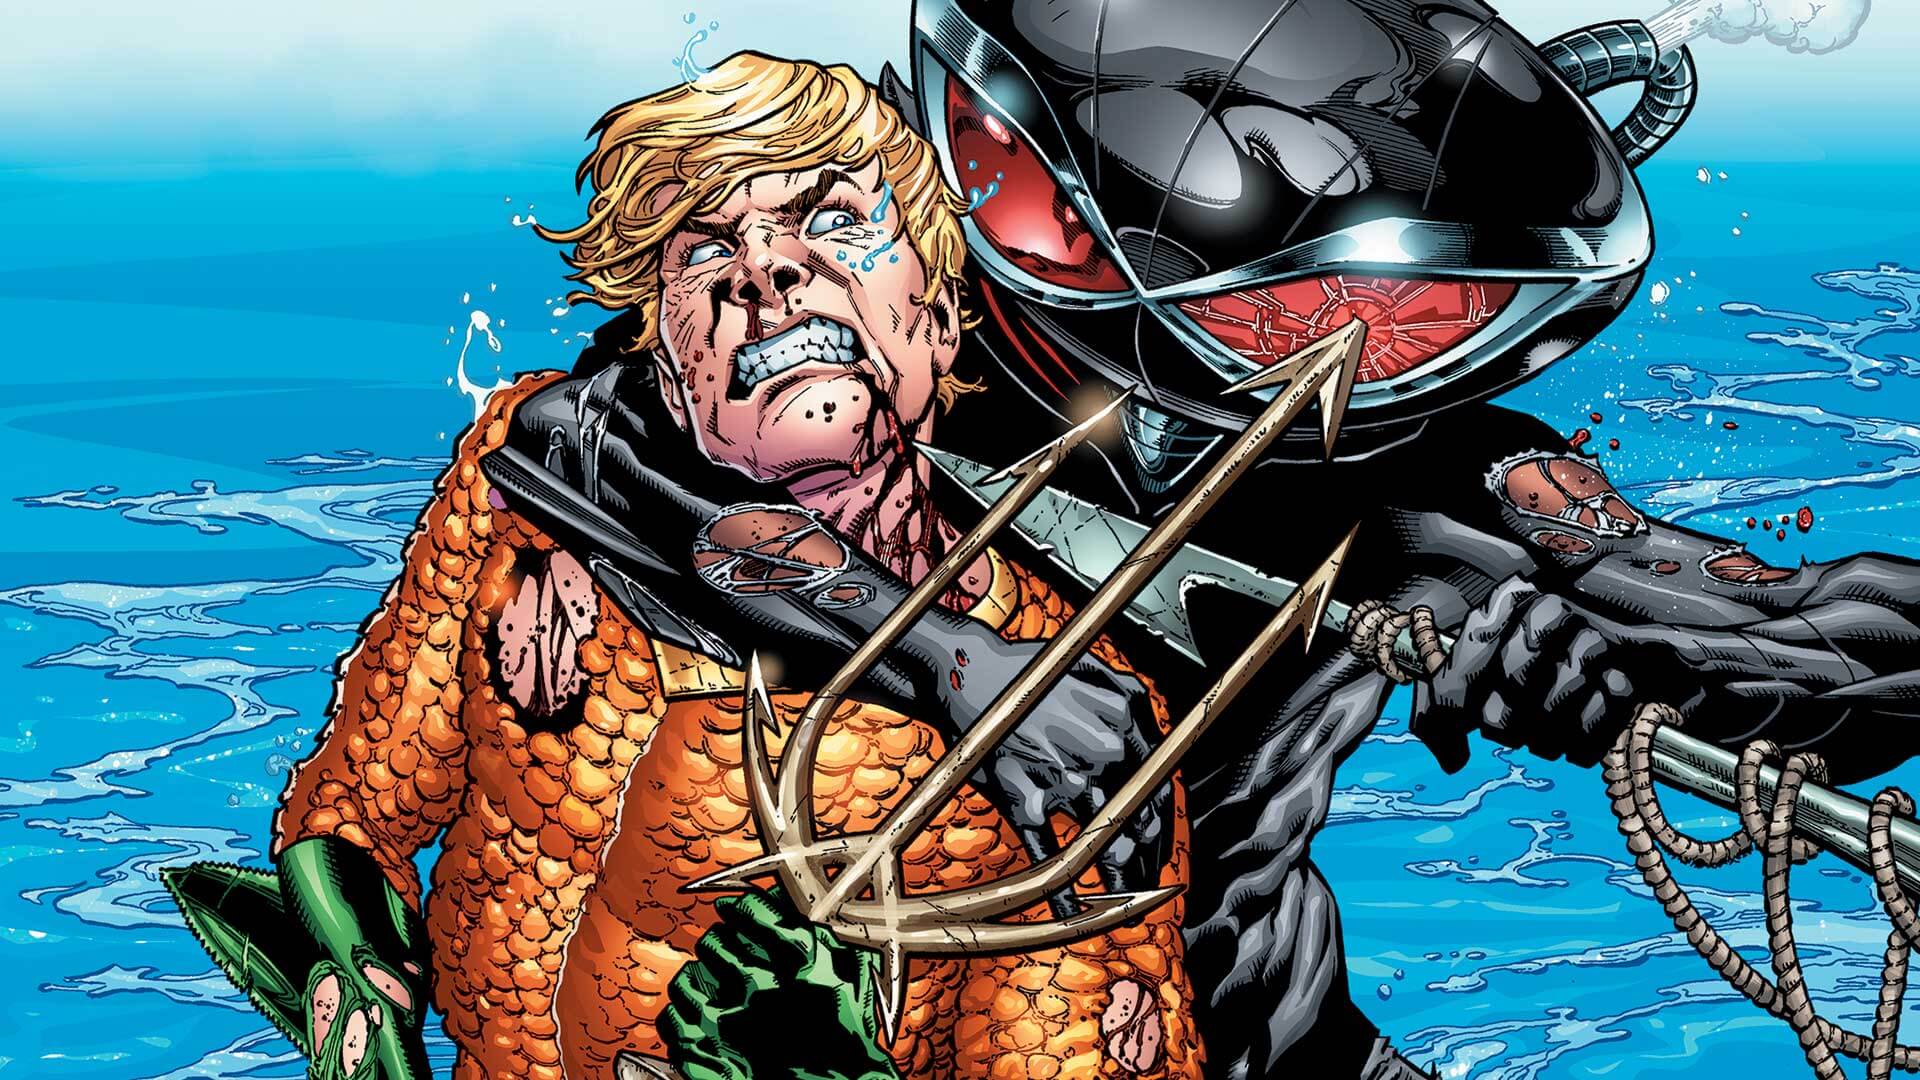 Black Manta Has Been Cast For Aquaman. The Nerd Stash